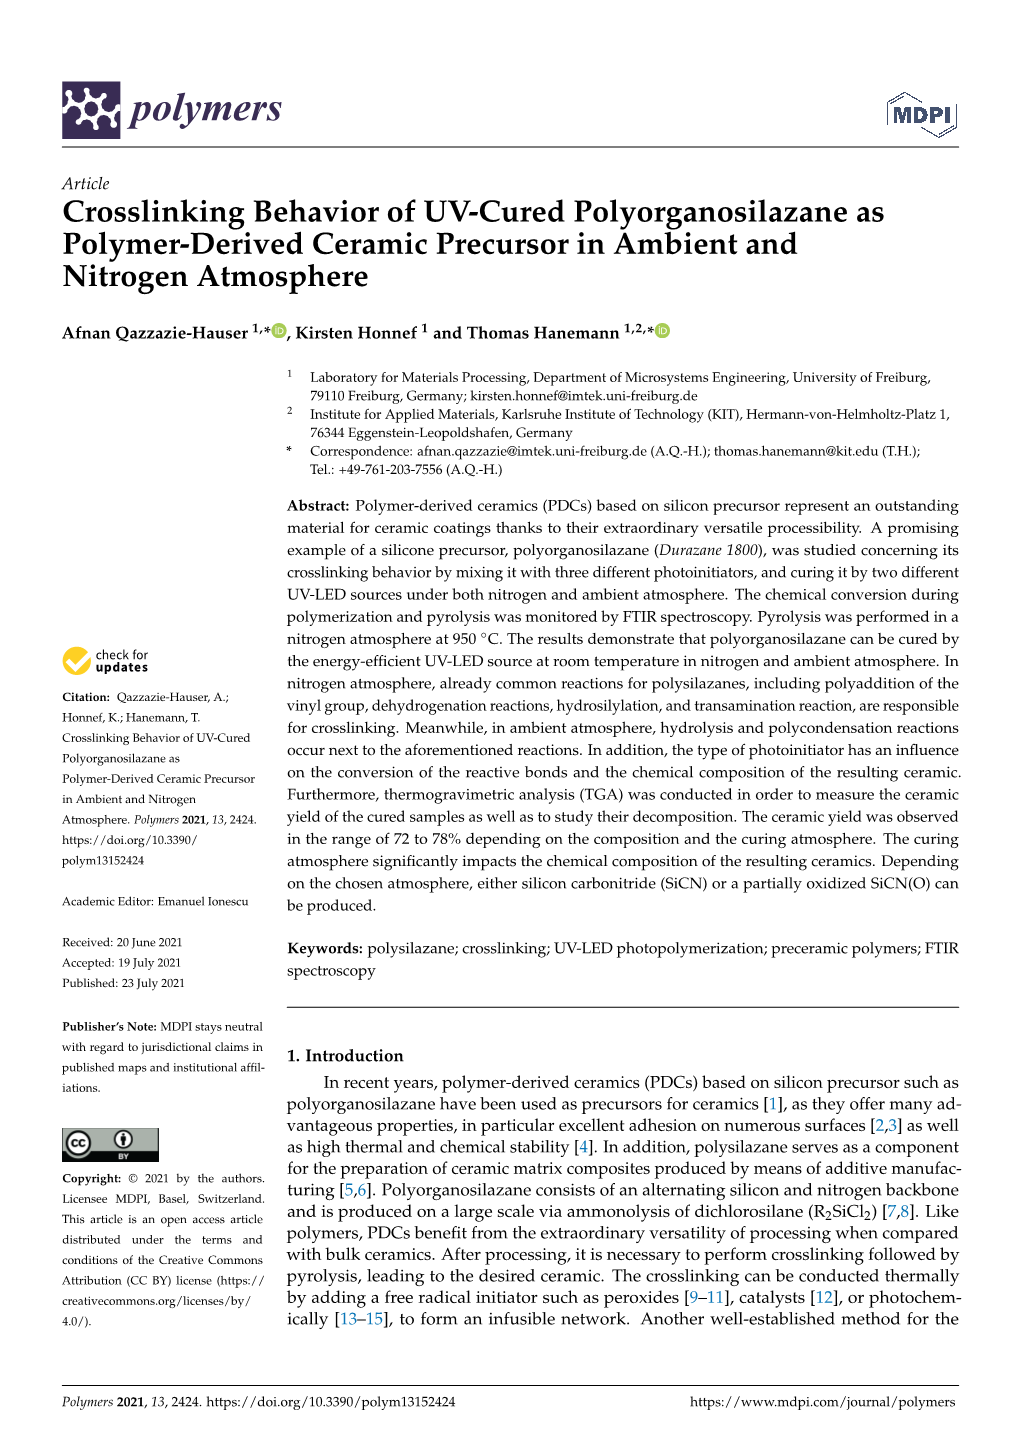 Crosslinking Behavior of UV-Cured Polyorganosilazane As Polymer-Derived Ceramic Precursor in Ambient and Nitrogen Atmosphere